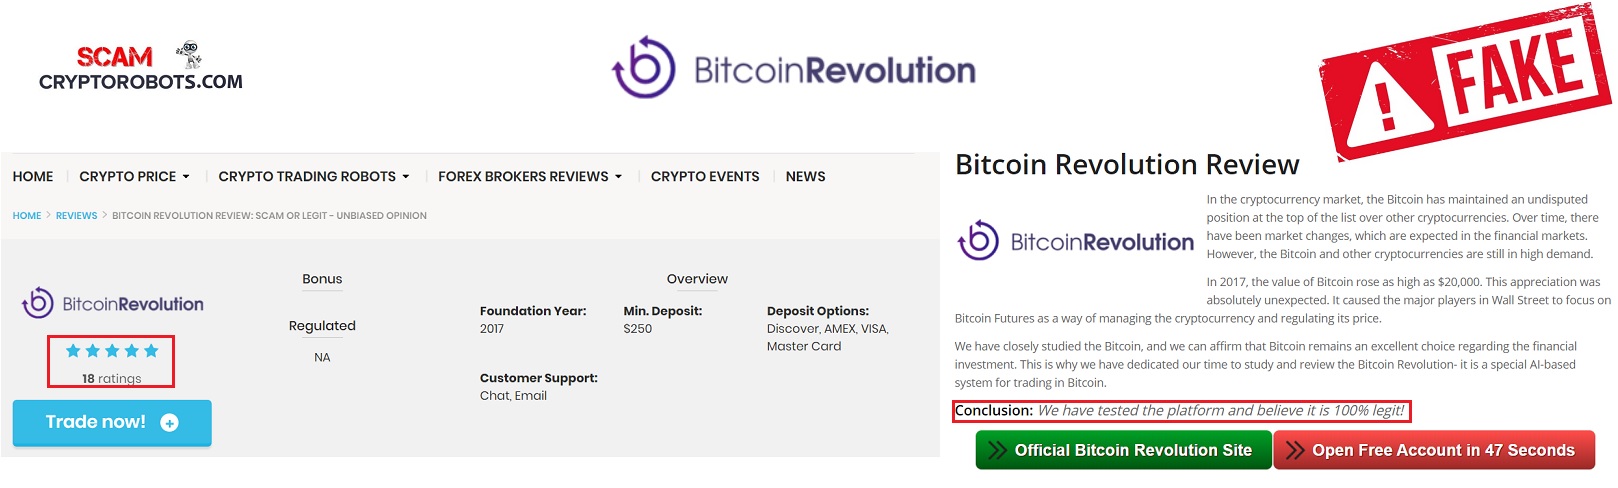 Bitcoin revolution review bonus